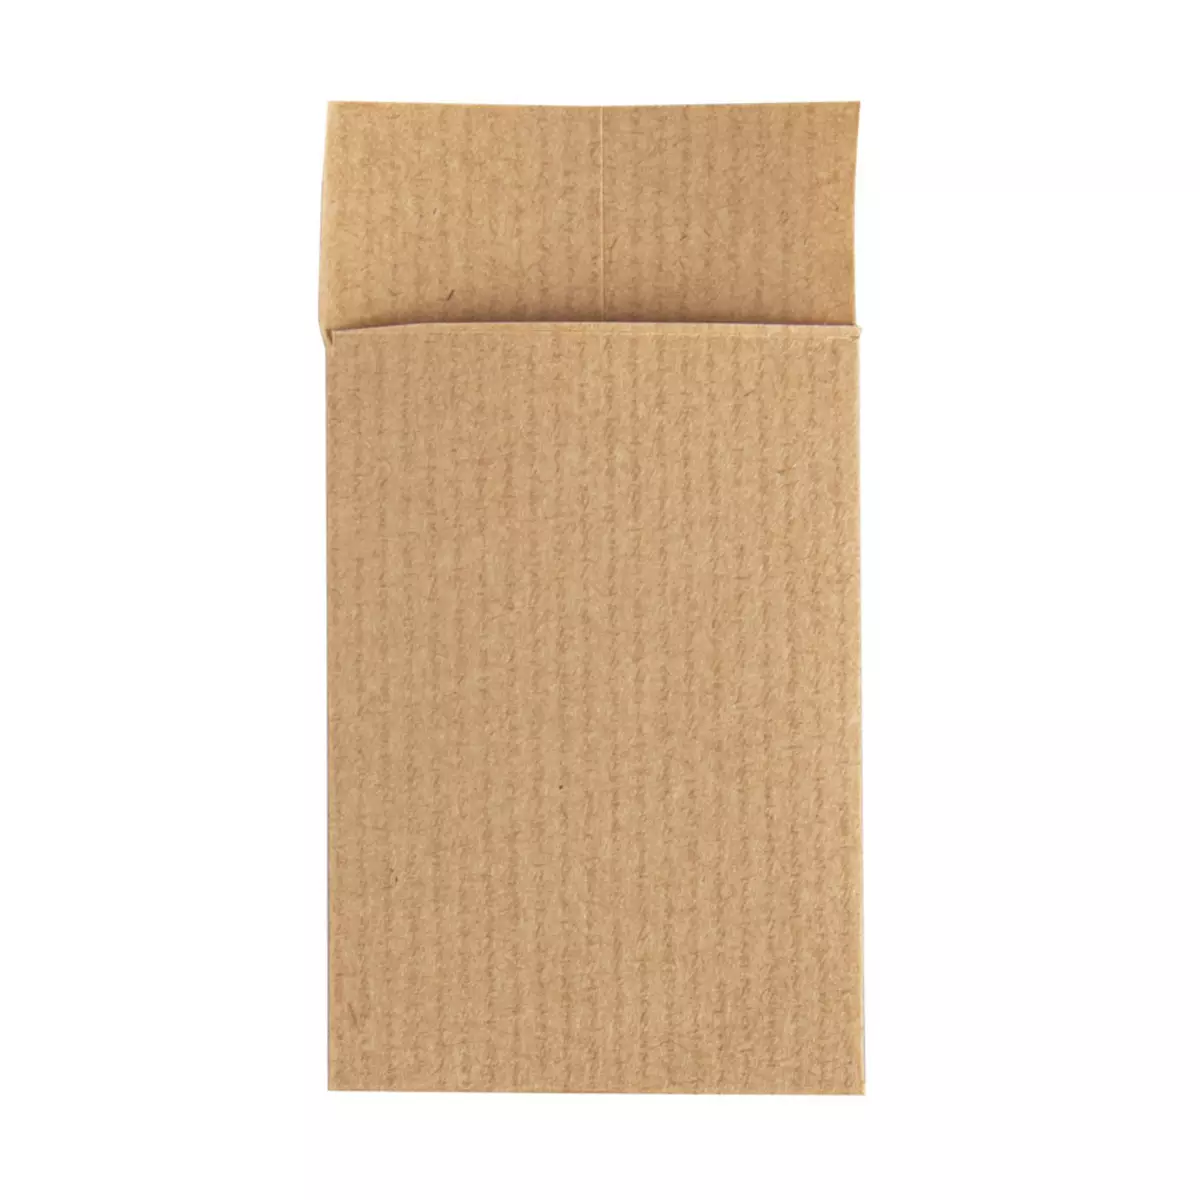 Rayher Mini - sac papier XXS, kraft, 4,5x6cm, 50 pces